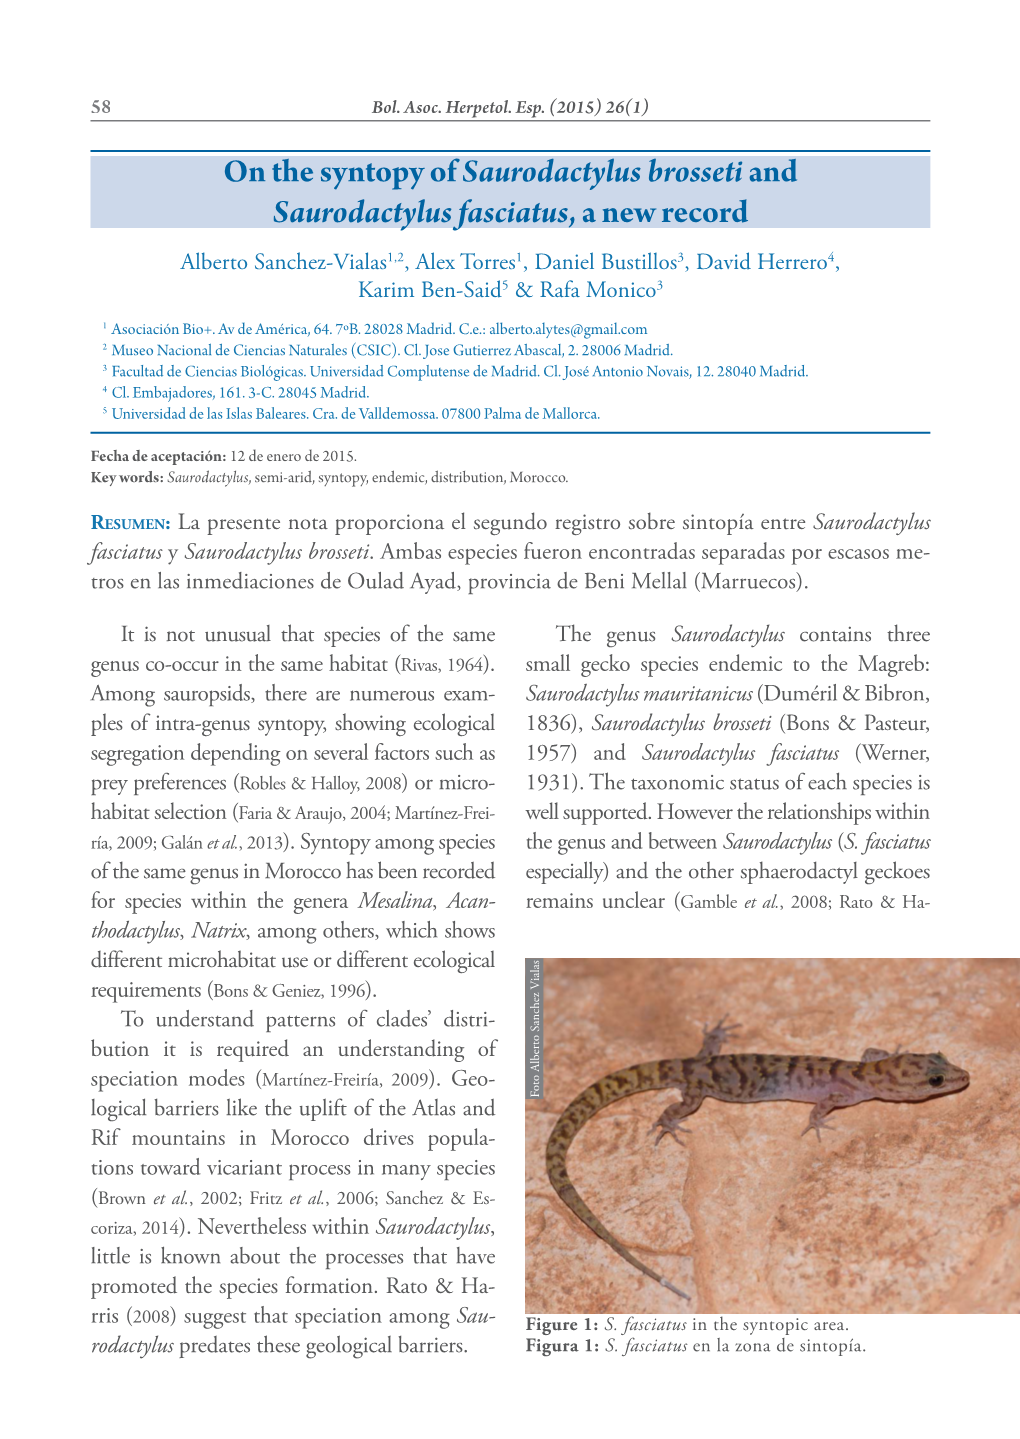 On the Syntopy of Saurodactylus Brosseti and Saurodactylus Fasciatus, a New Record